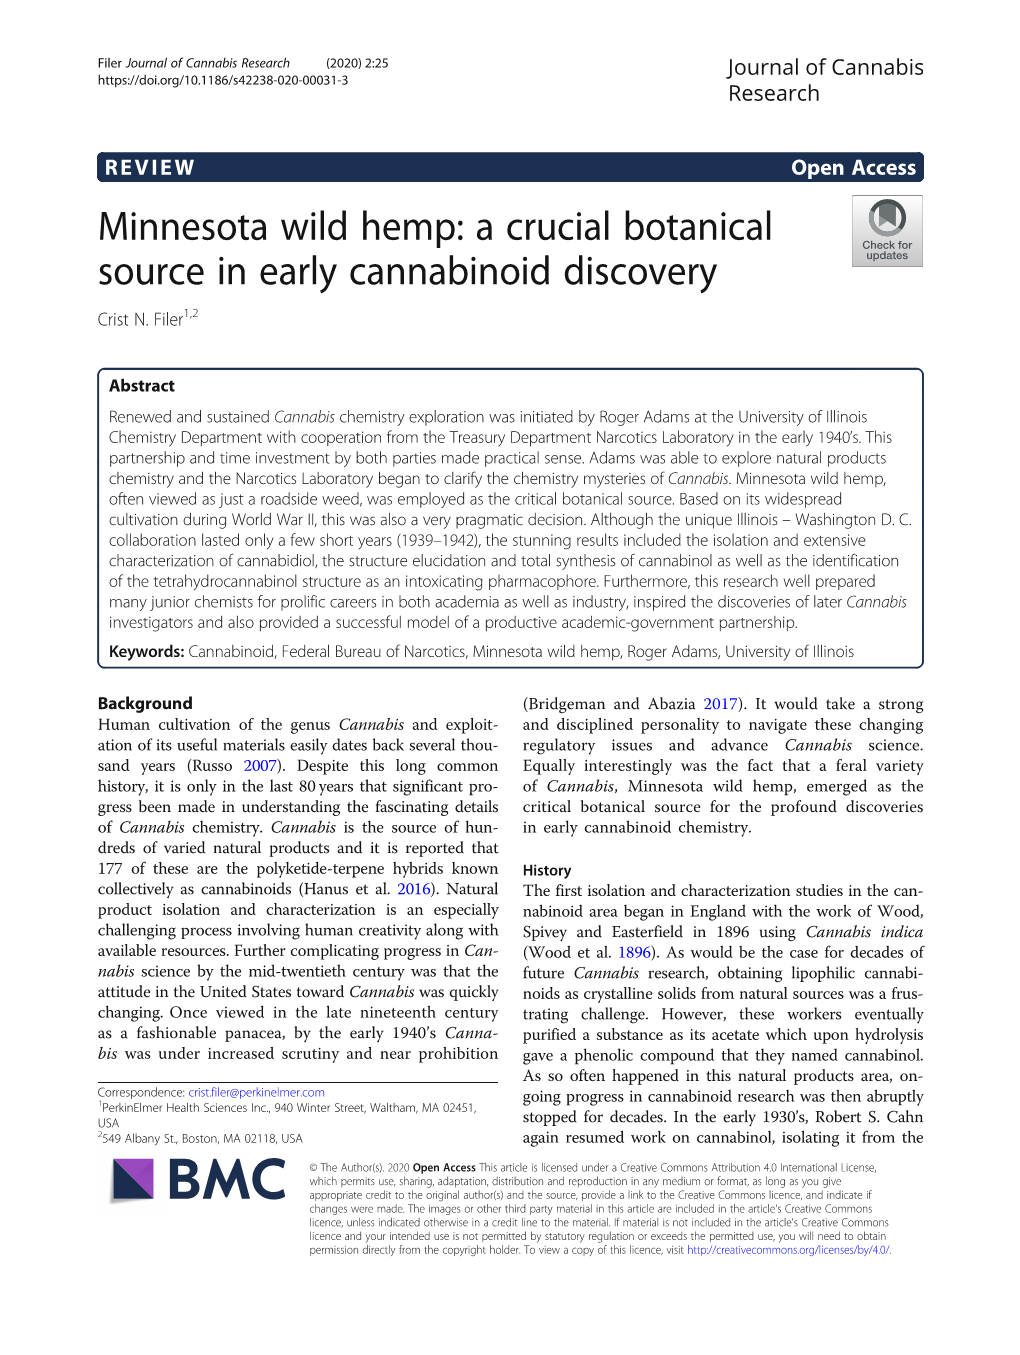 Minnesota Wild Hemp: a Crucial Botanical Source in Early Cannabinoid Discovery Crist N